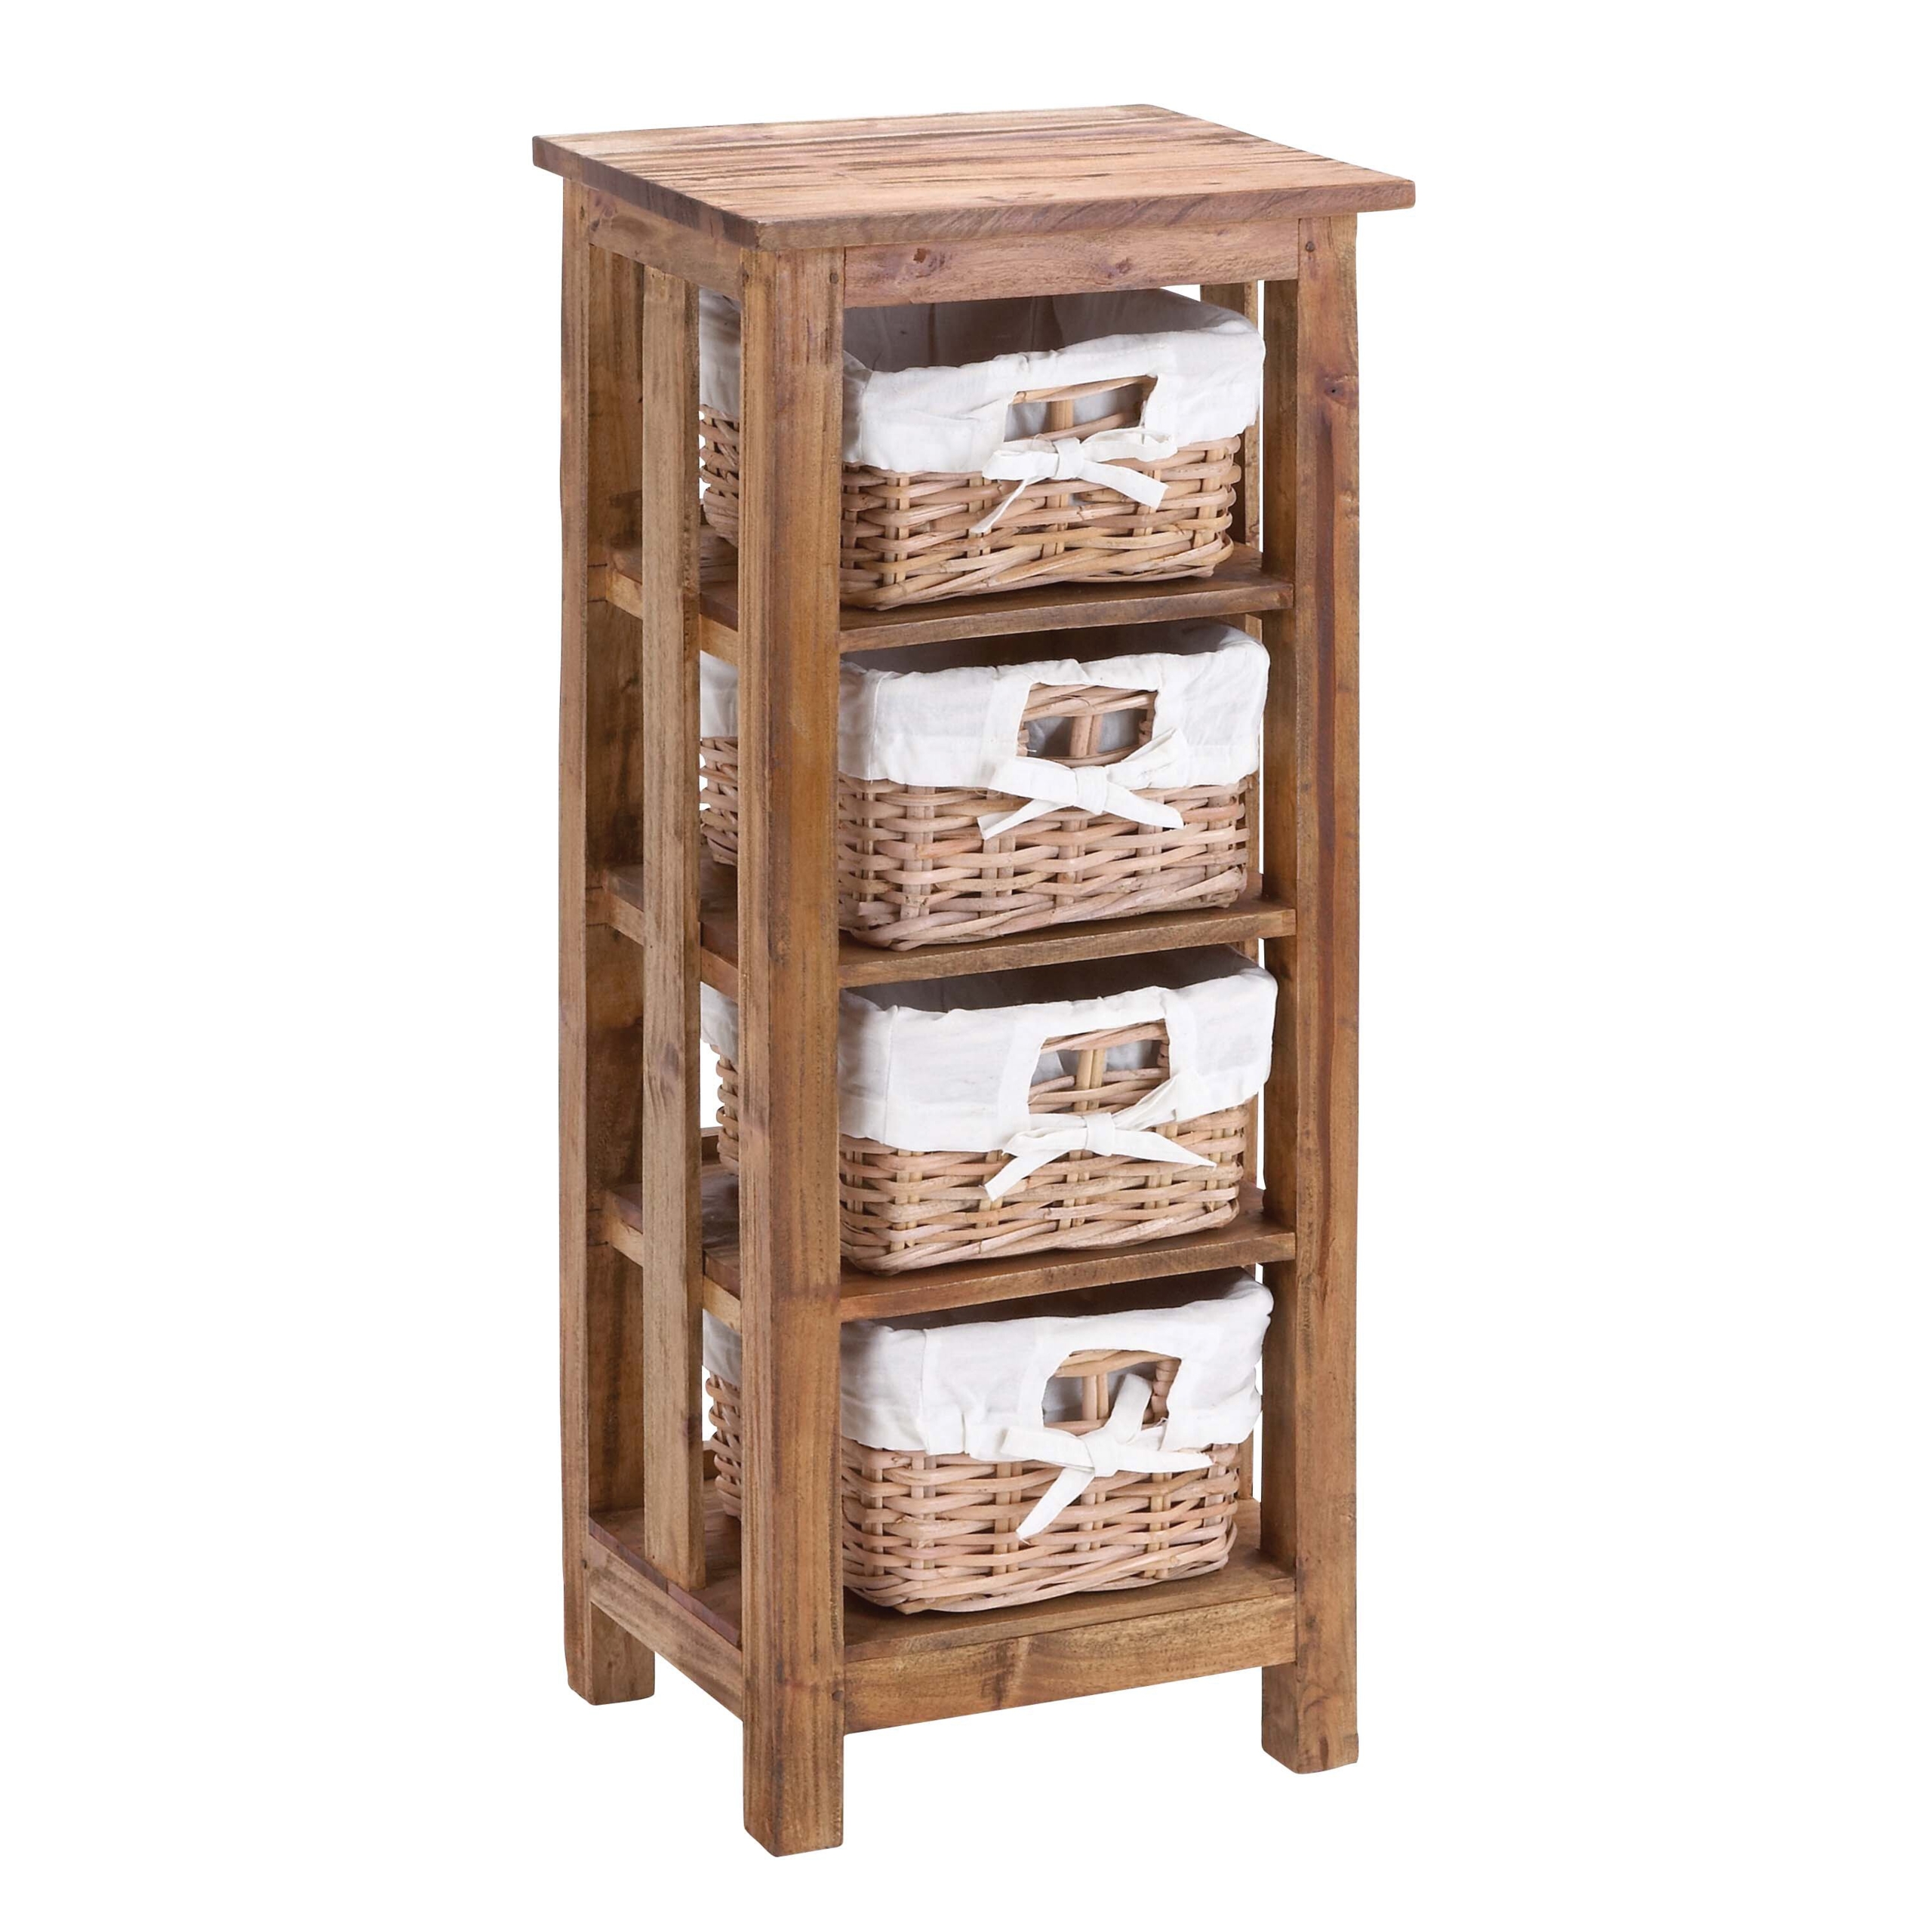 Benzara Mahogany Wooden Rattan Basket with 3 Shelves and Storage